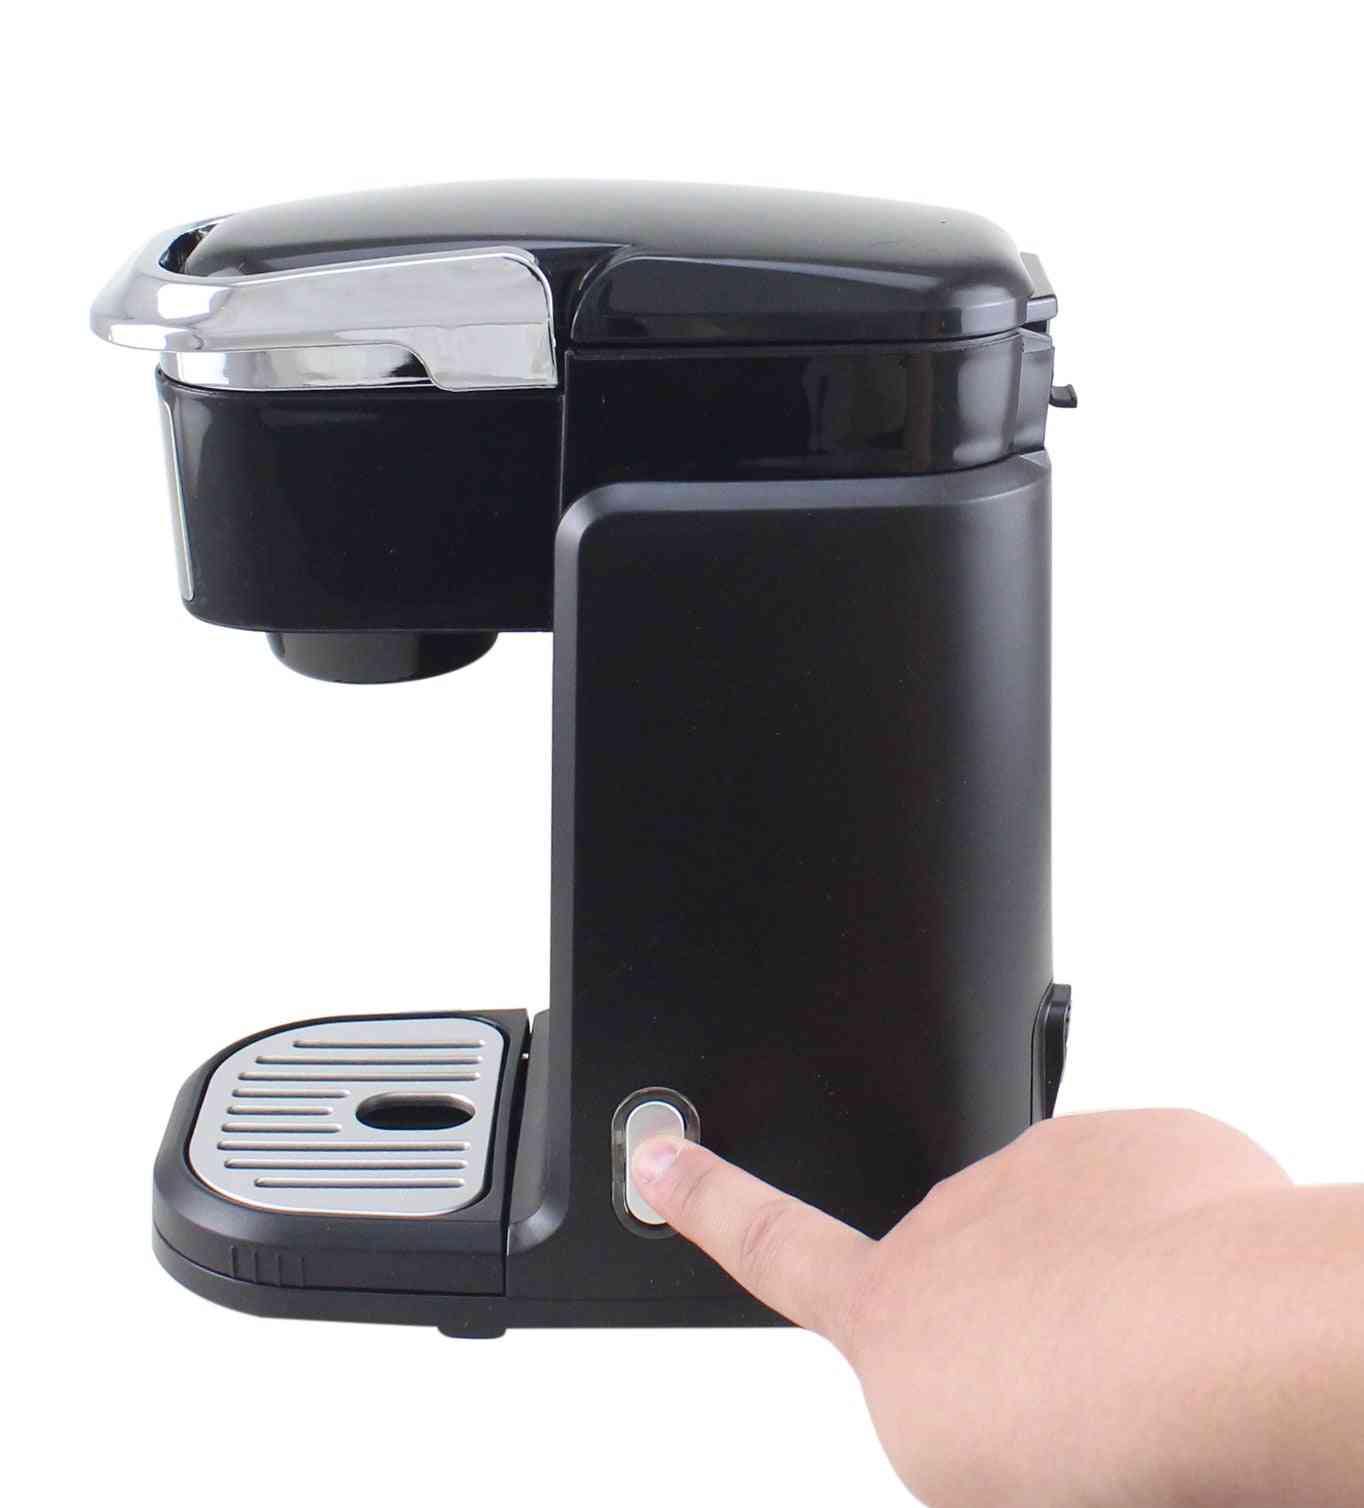 Filter Coffee Machine Single Serve Coffee Maker